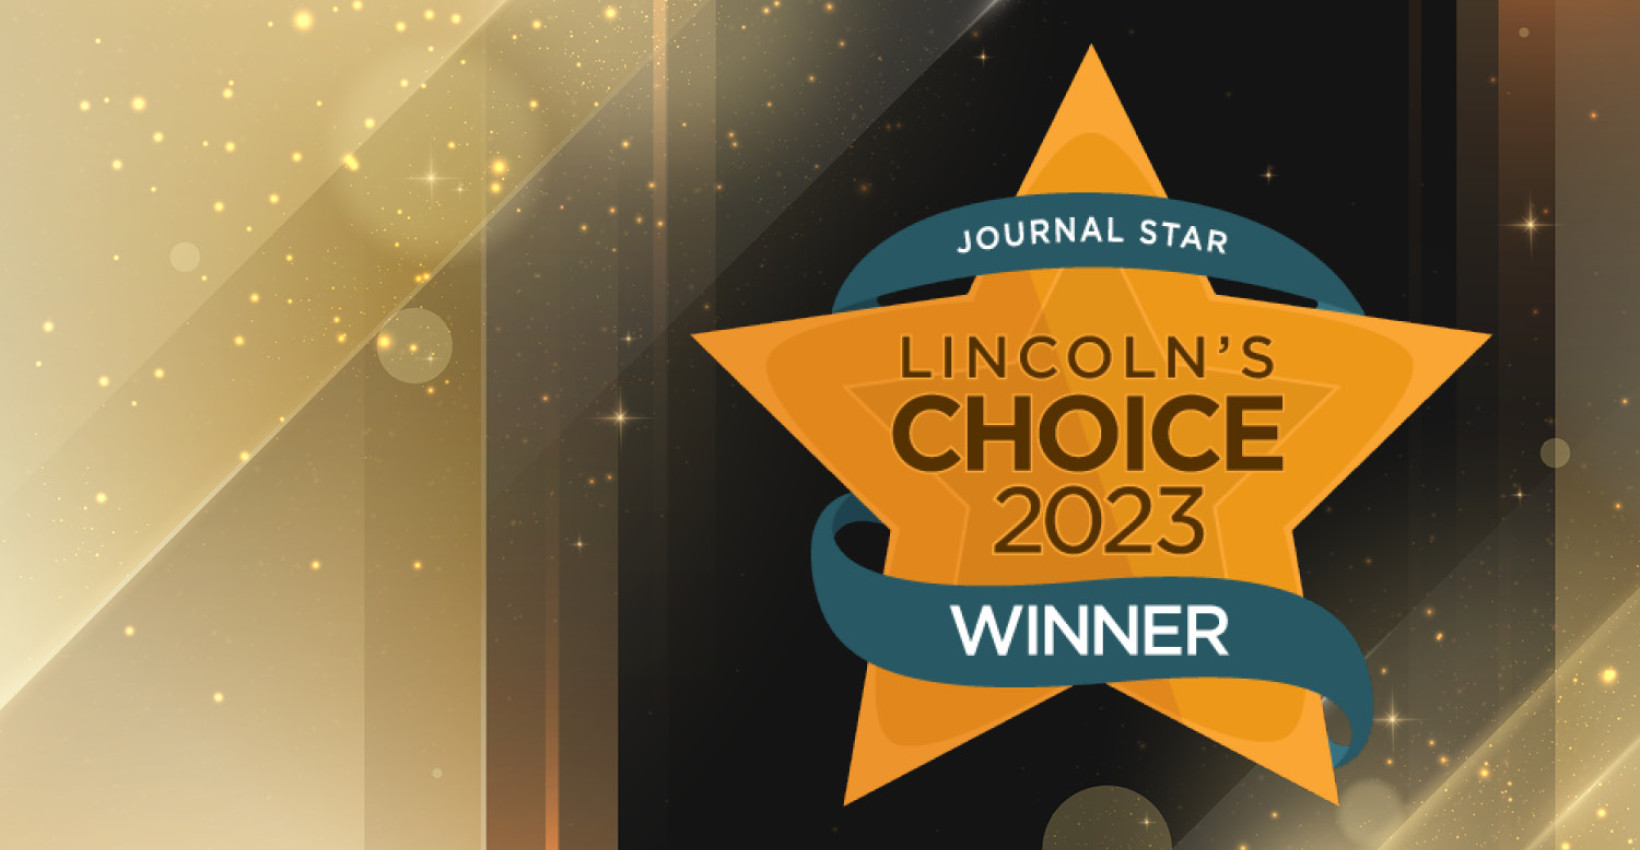 lincoln's choice winner 2023